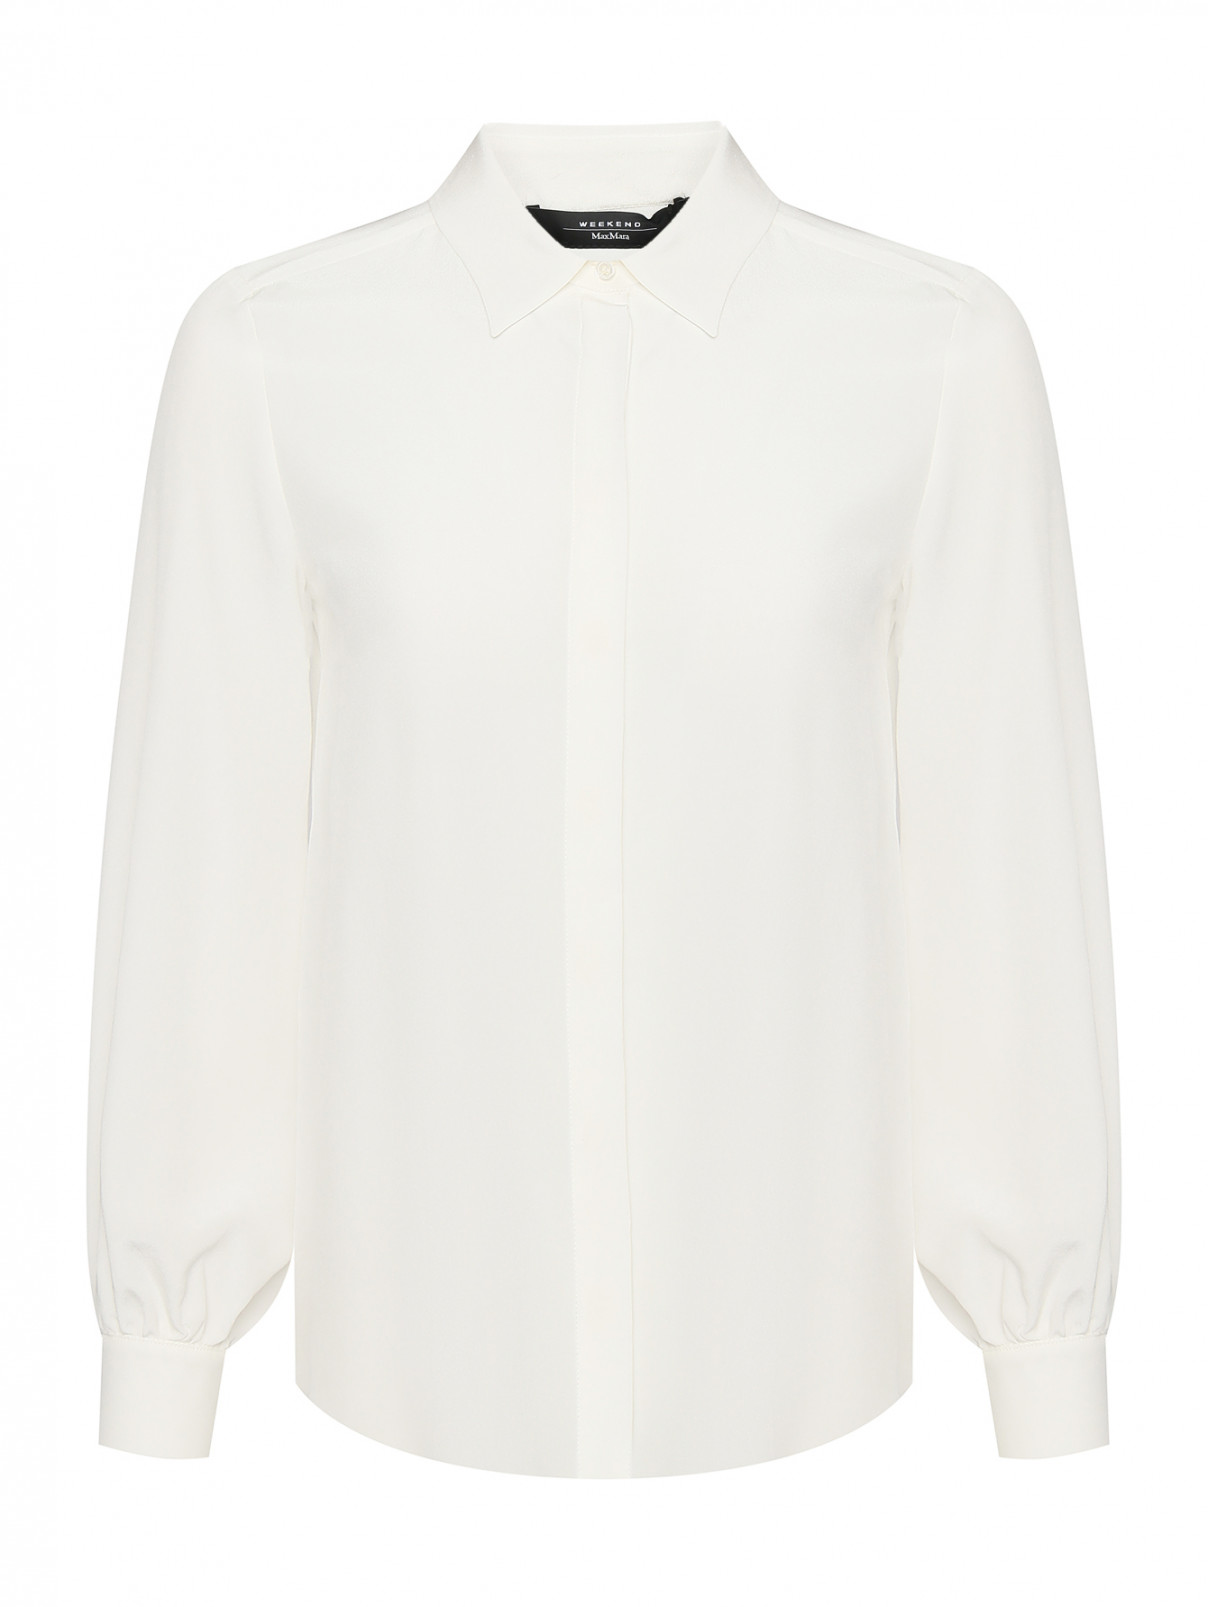 Рубашка из шелка Weekend Max Mara  –  Общий вид  – Цвет:  Белый